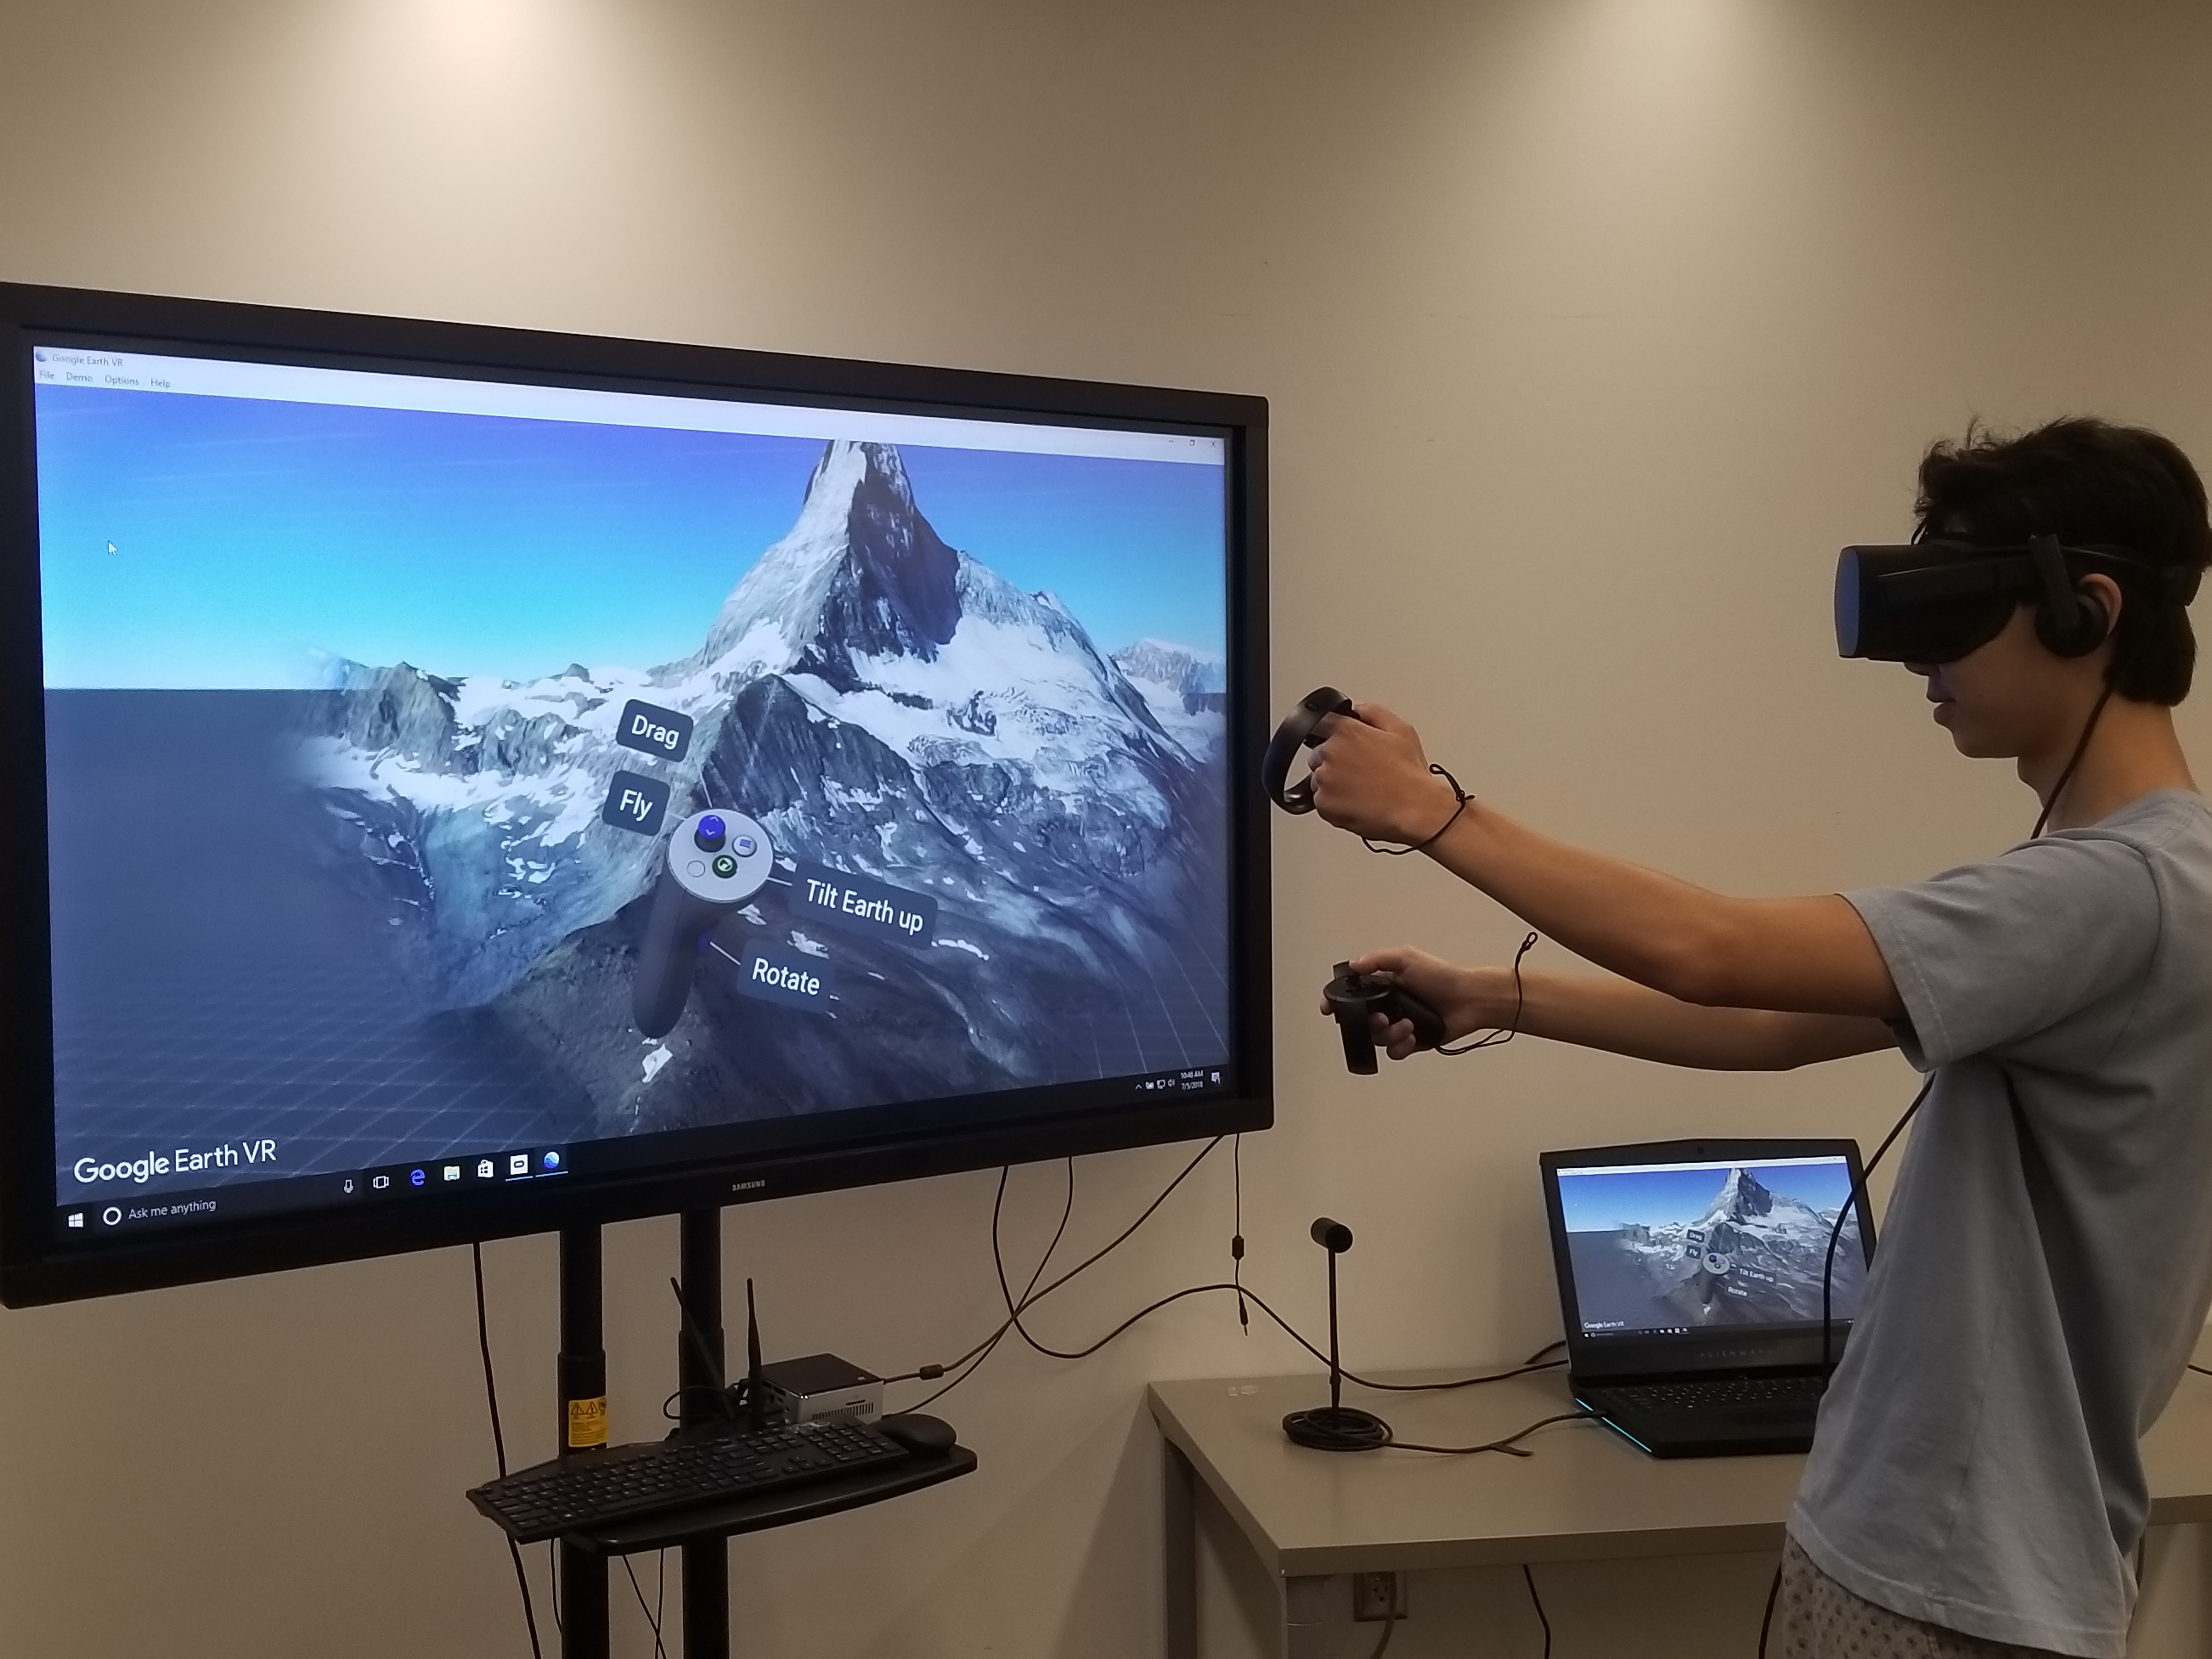 Student using Oculus Rift headset to explore Google Earth VR